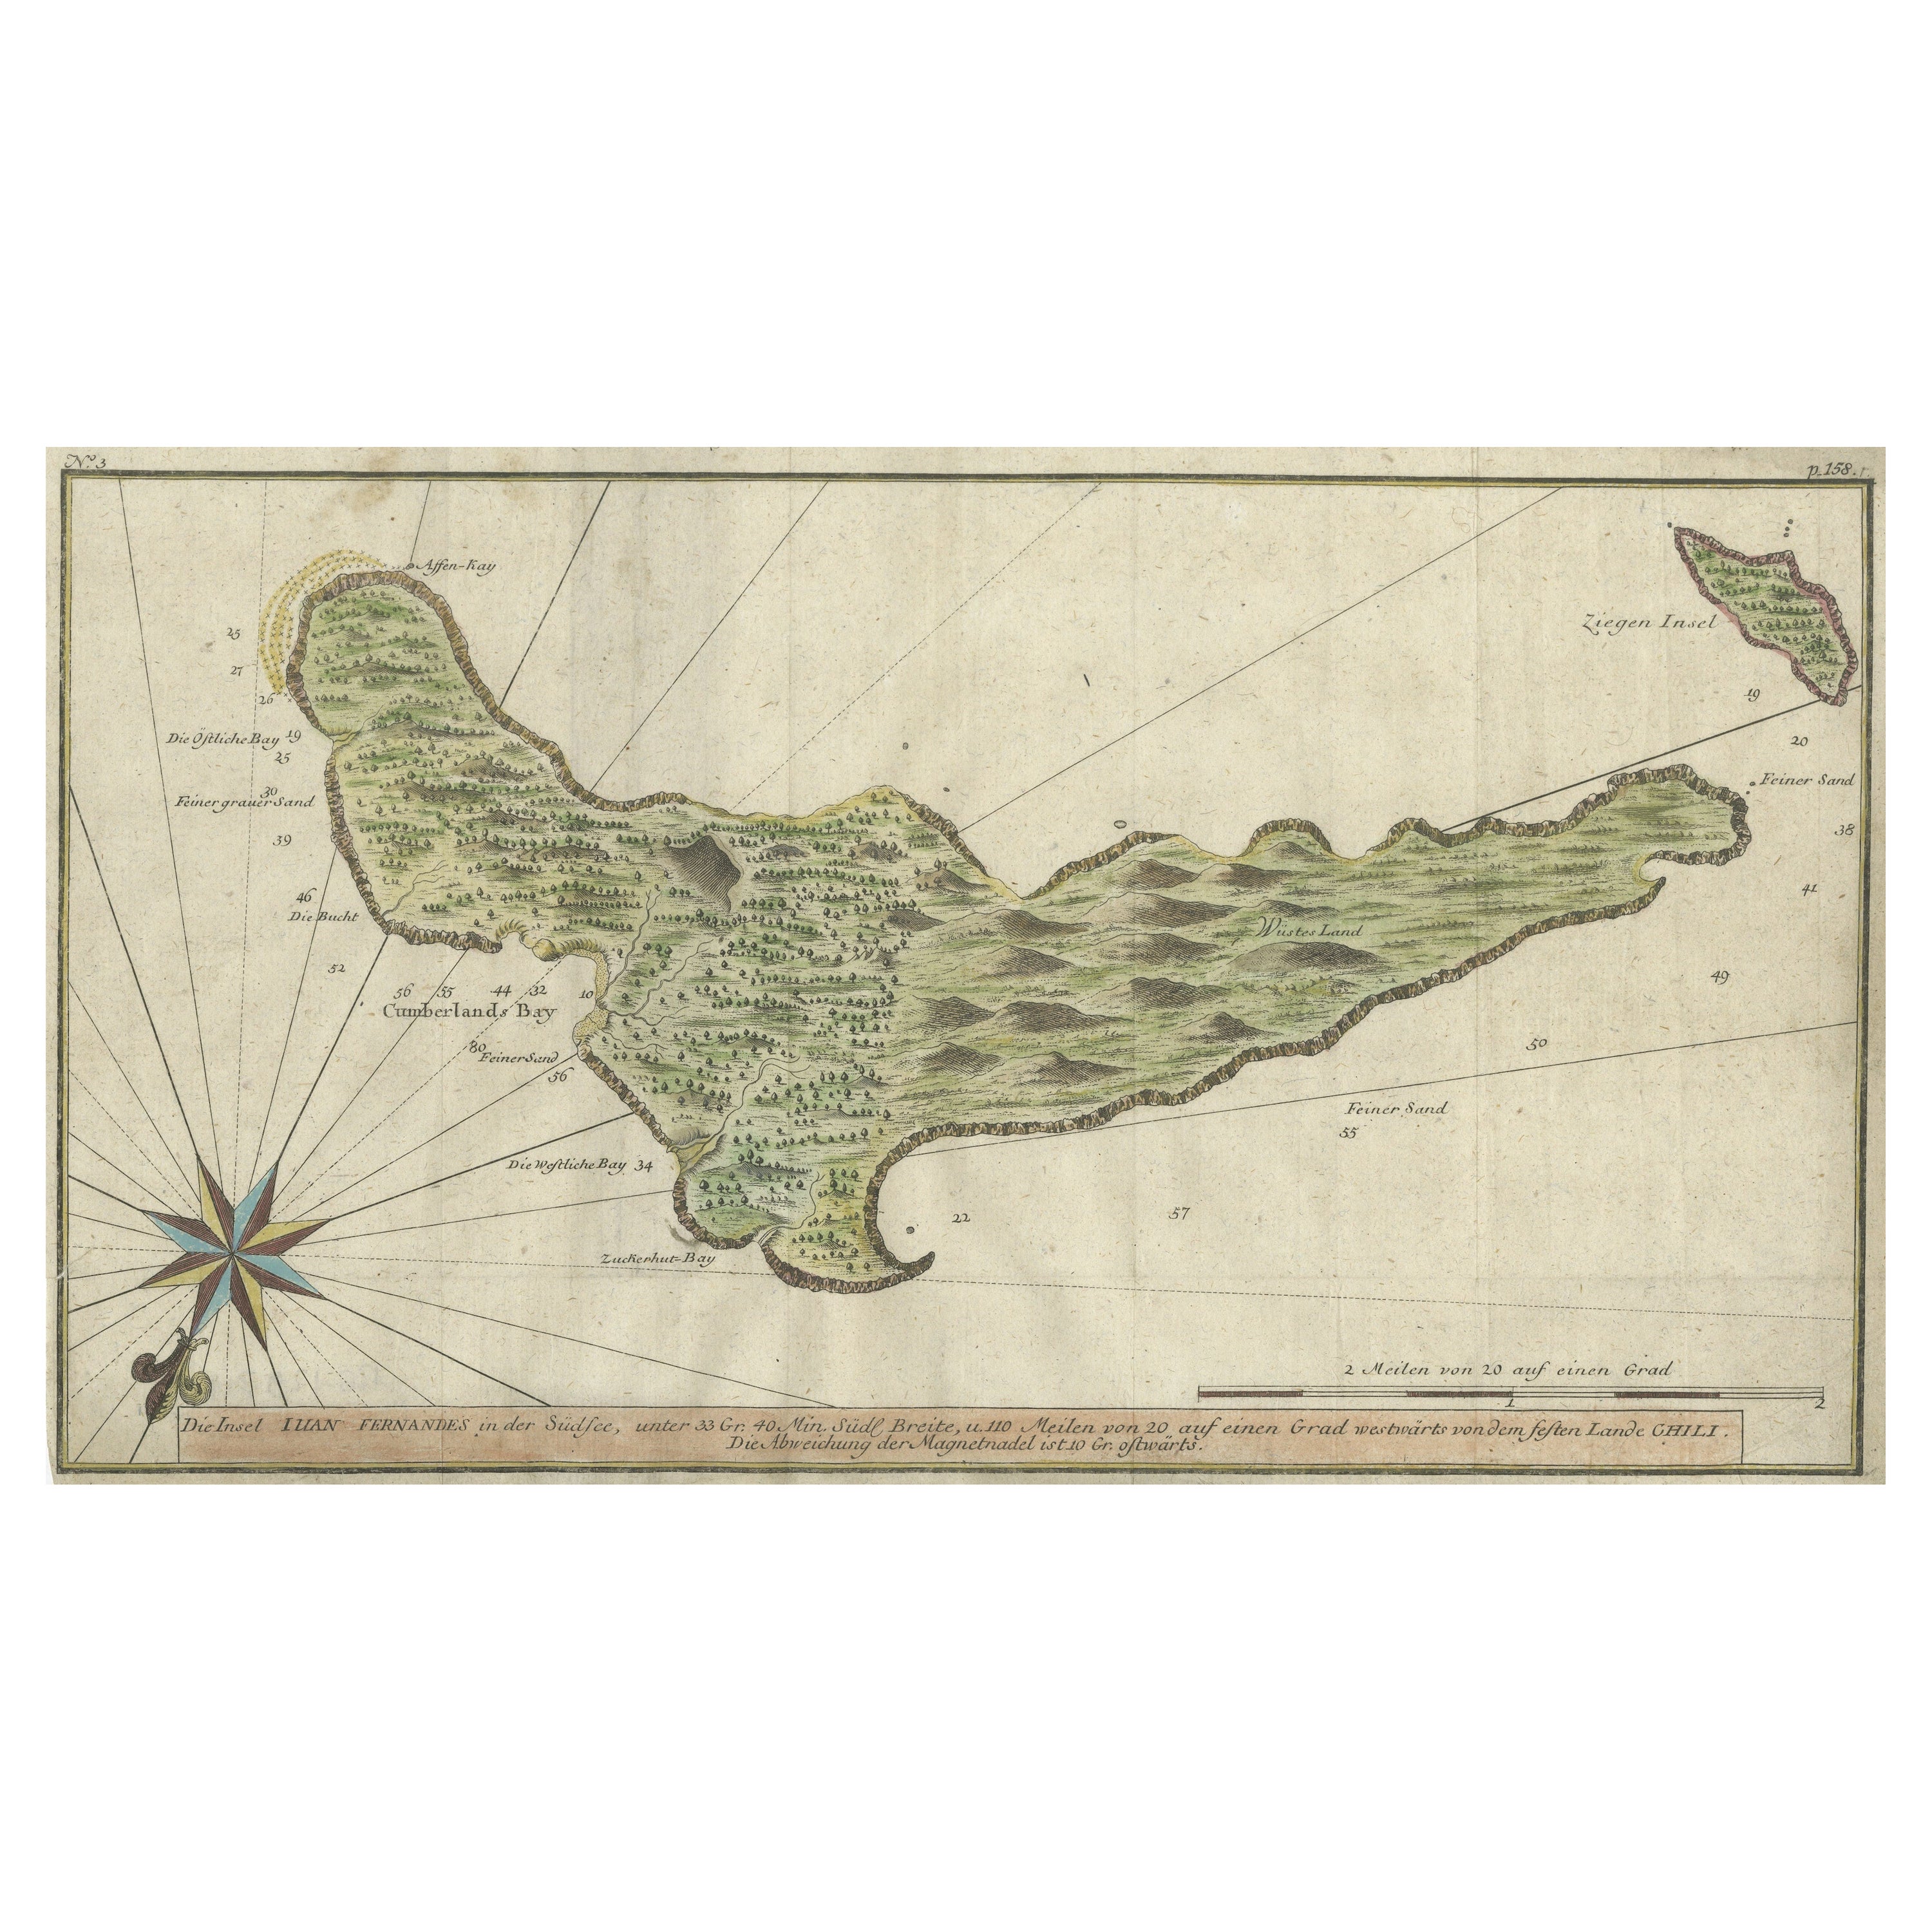 Rare Handcolored Map of Isle de Juan Fernandes 'Robinson Crusoe Island', Chili